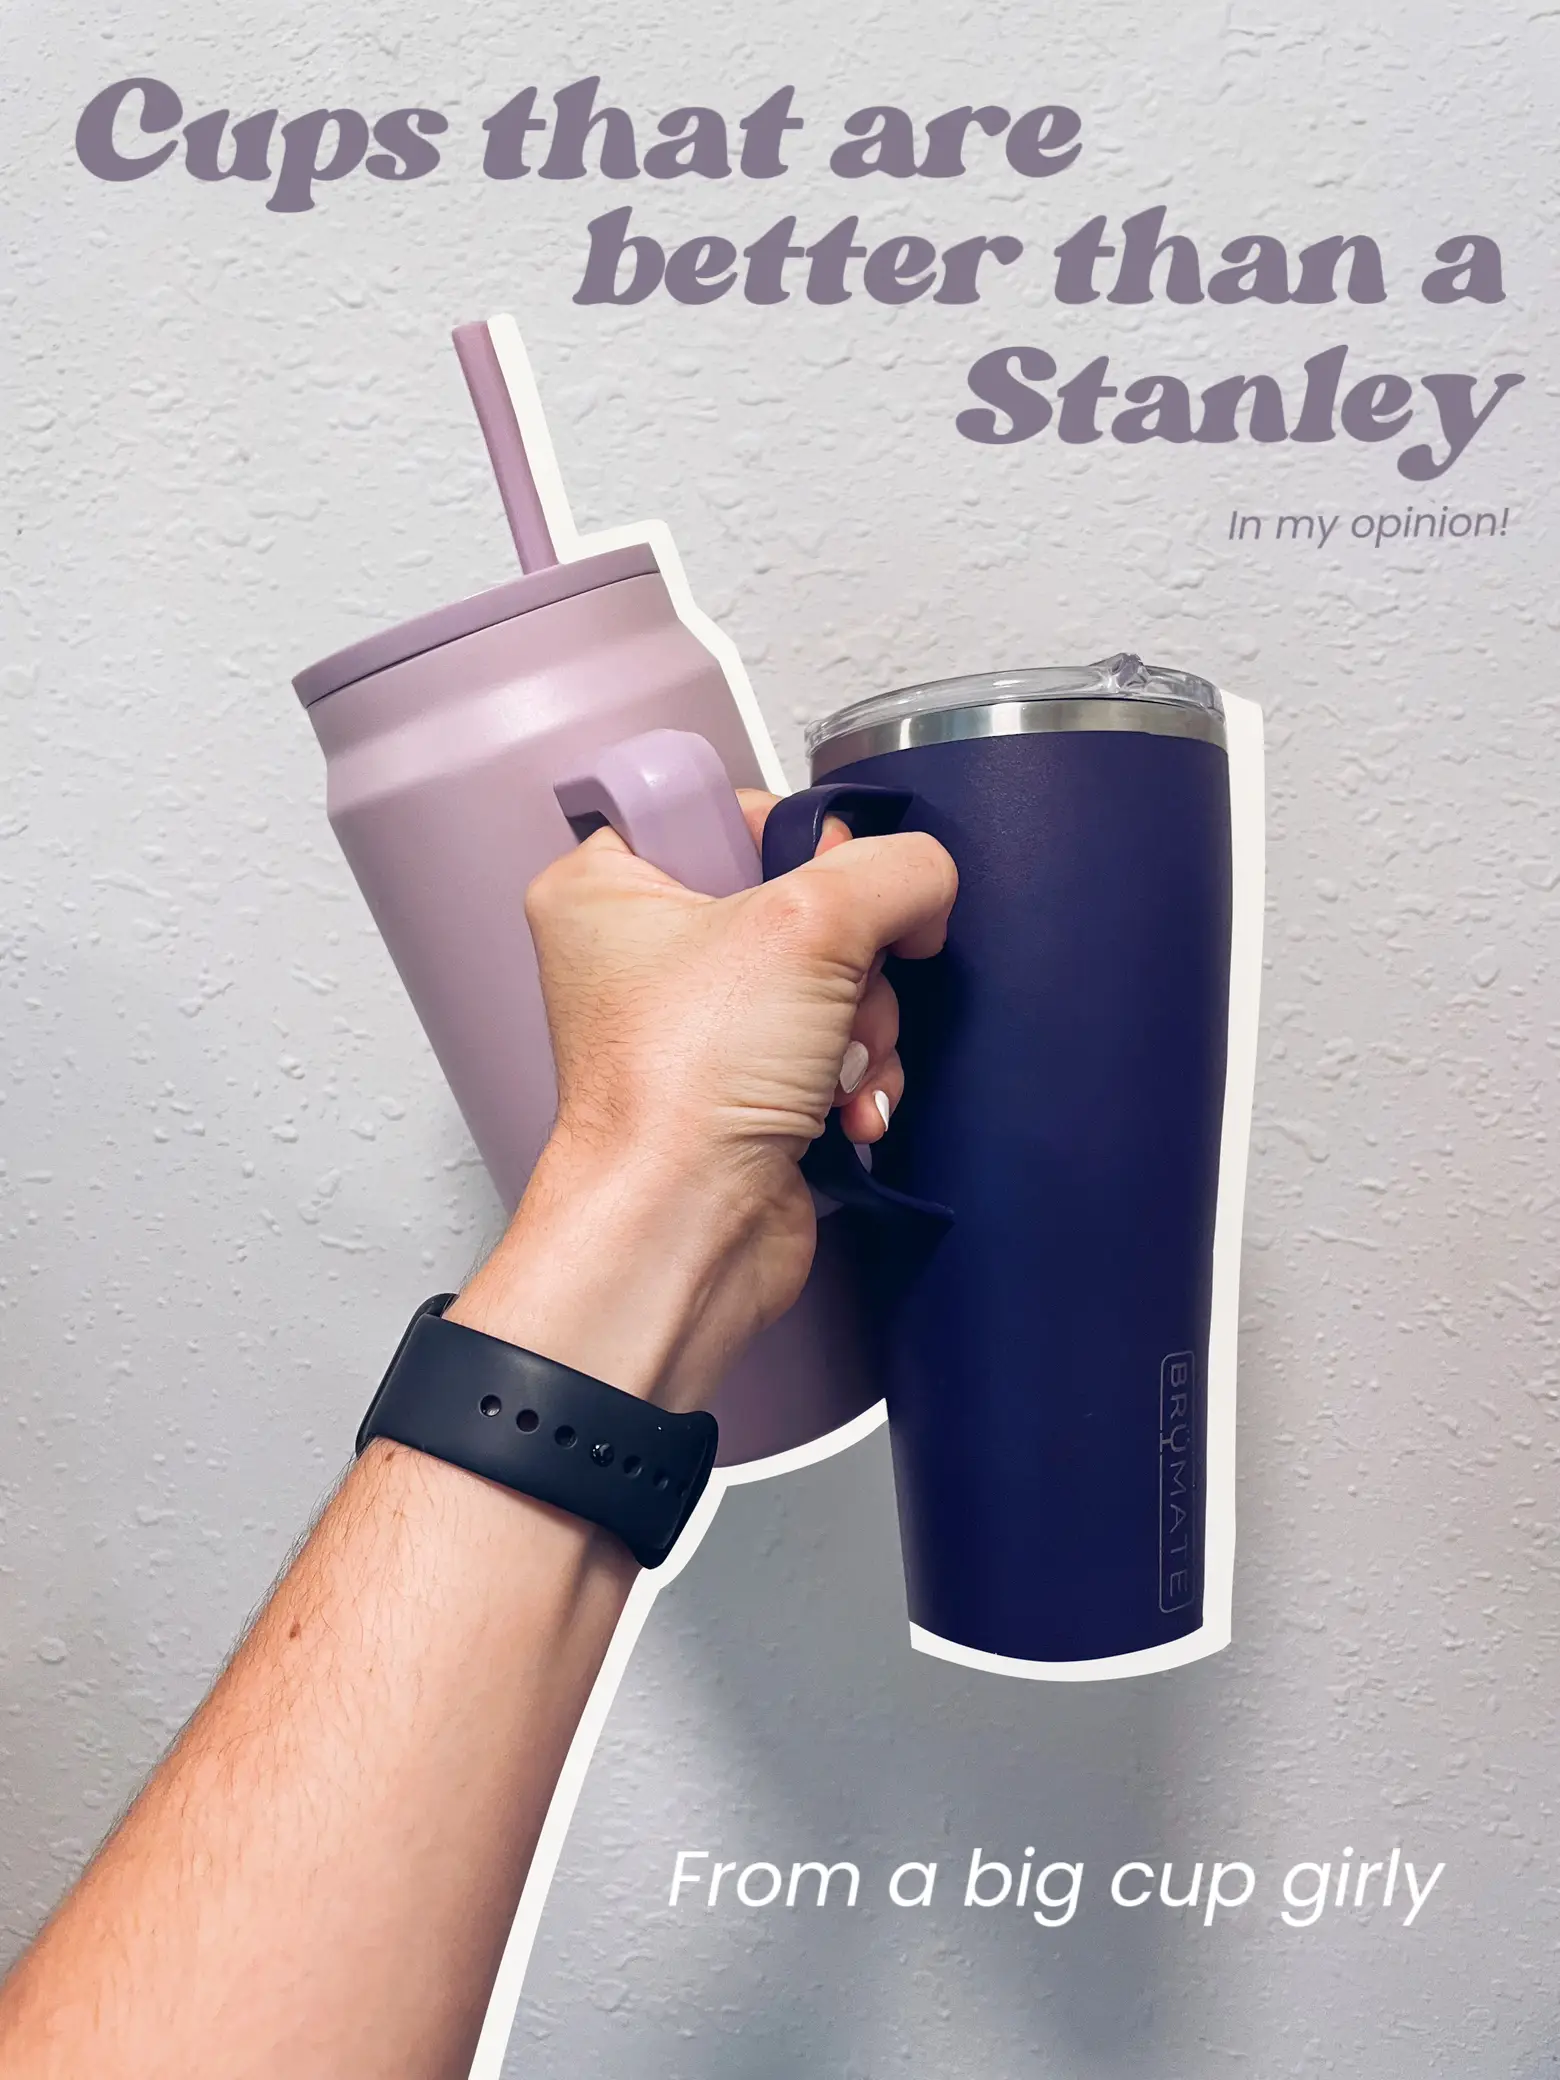 Preppy Stuff Water Bottle Pouch For Yeti Travel Mugs, Stanley